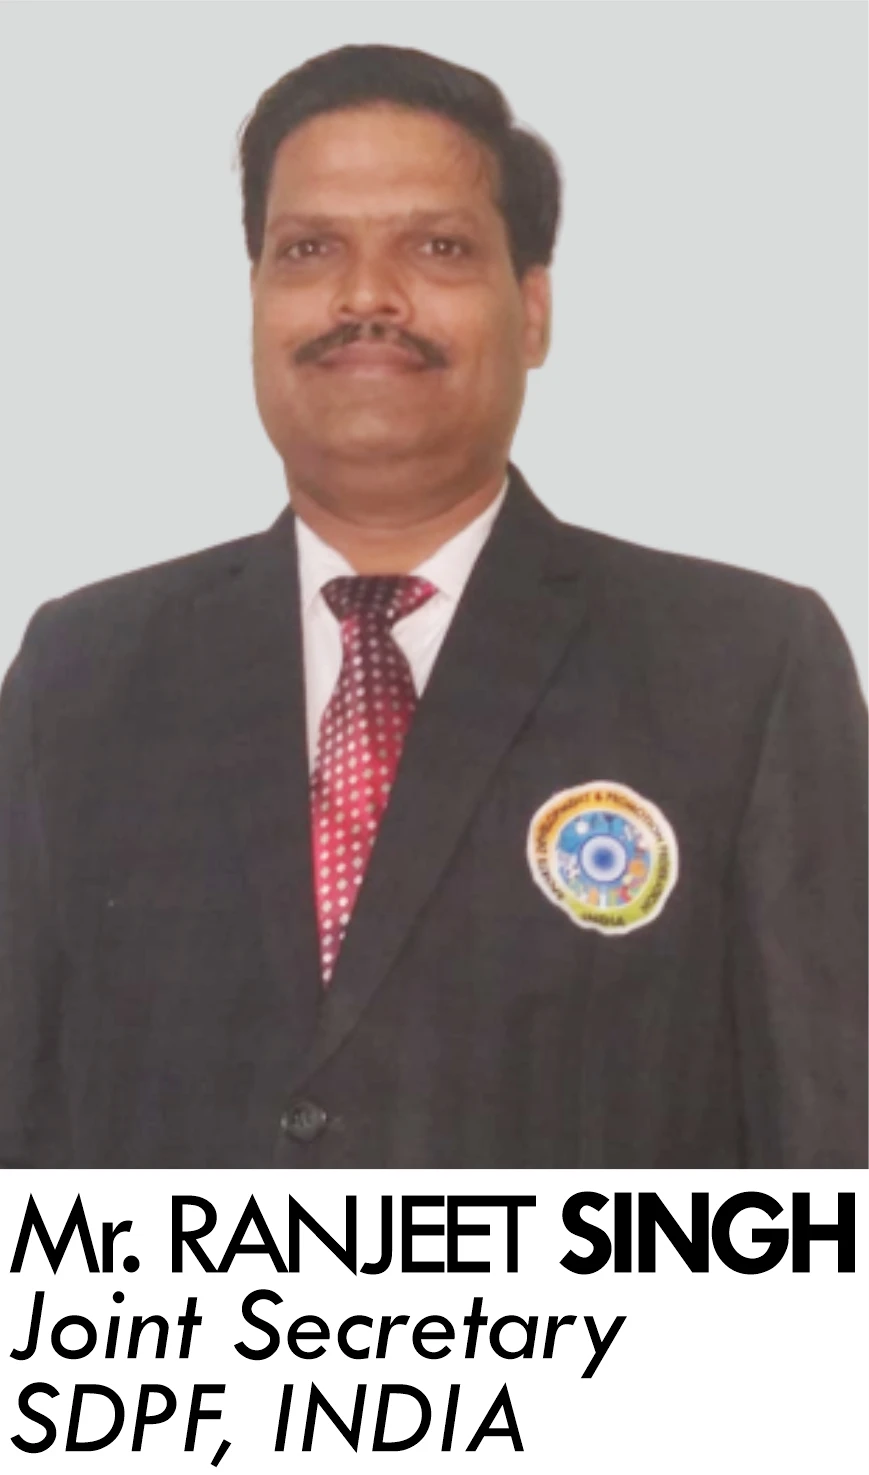 Mr. Ranjeet Singh - SDPF, India